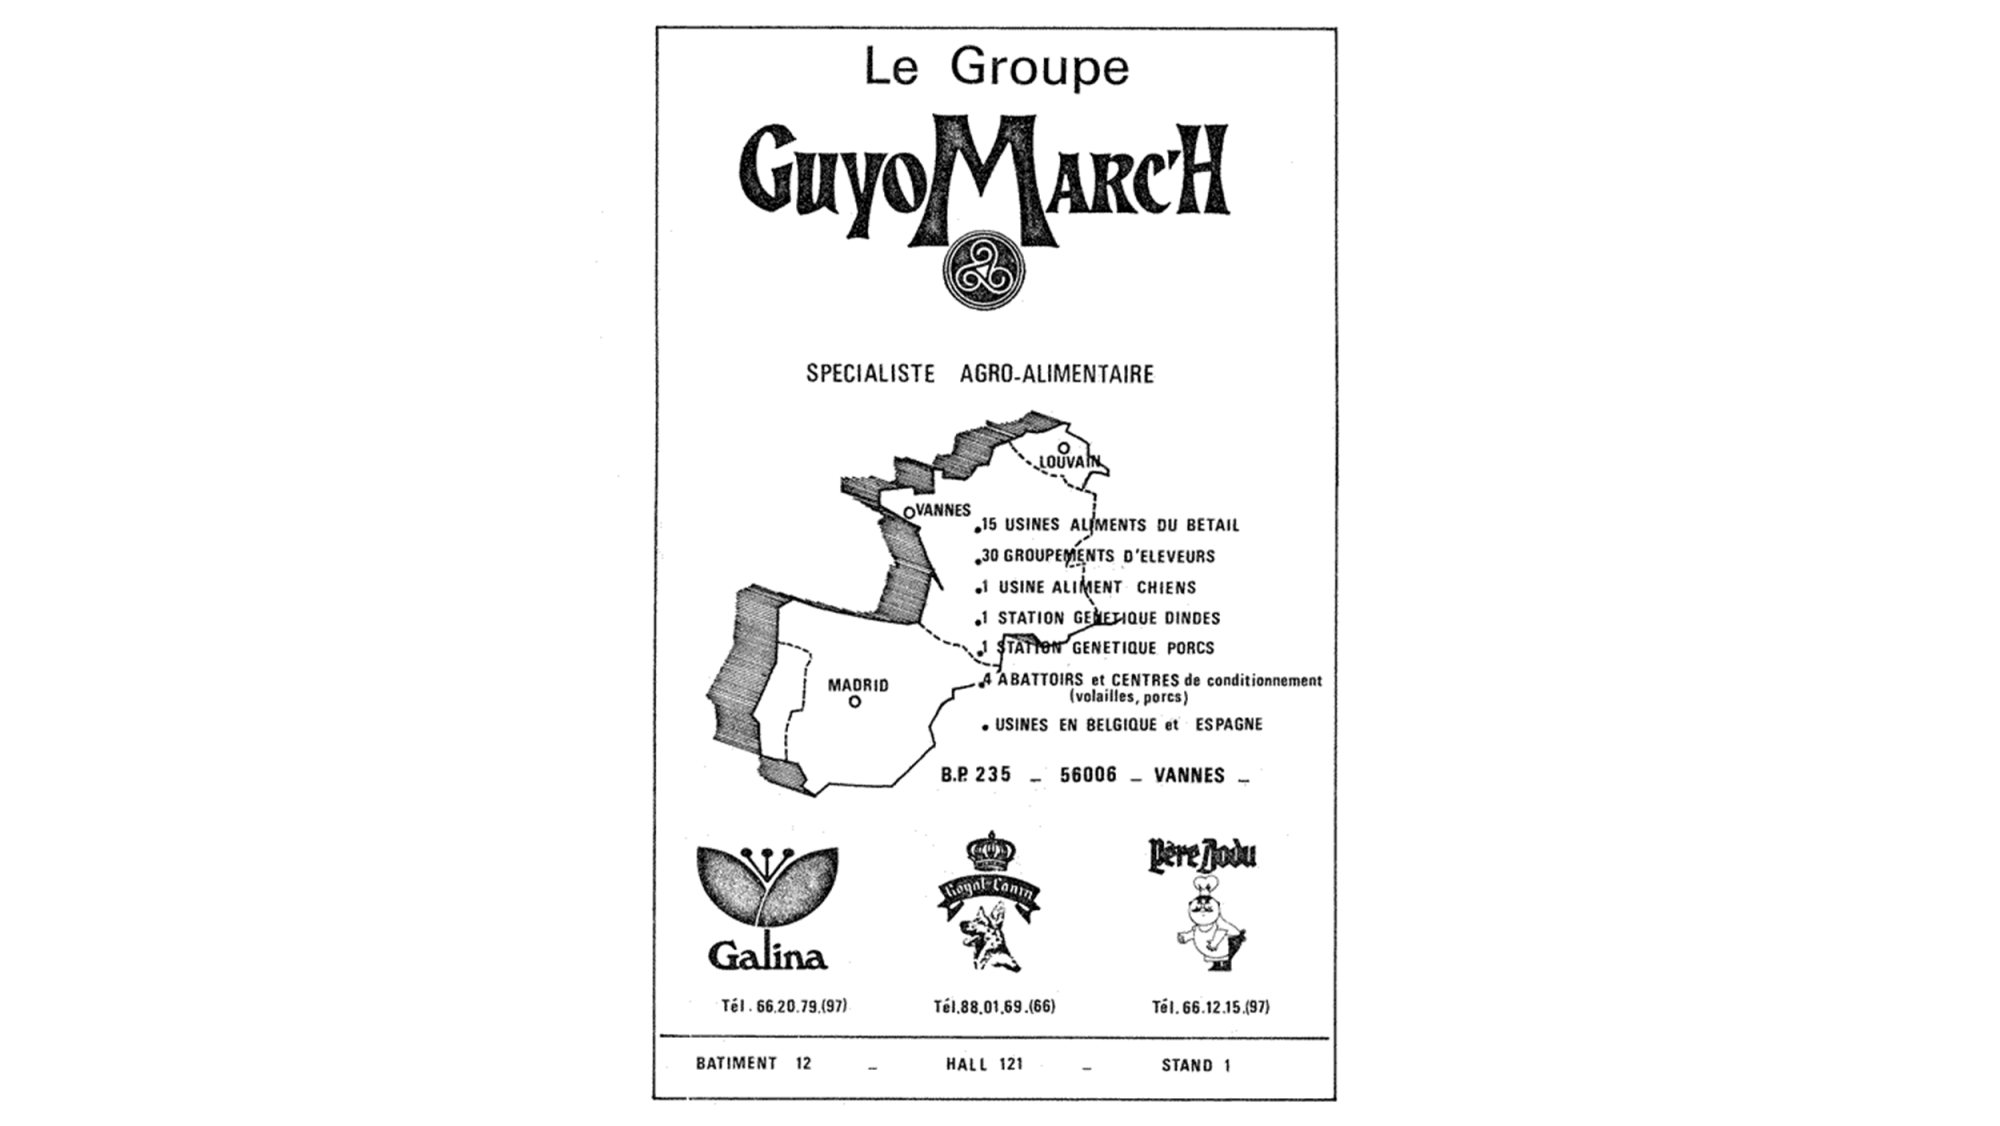 Guyomarc'h grou poster